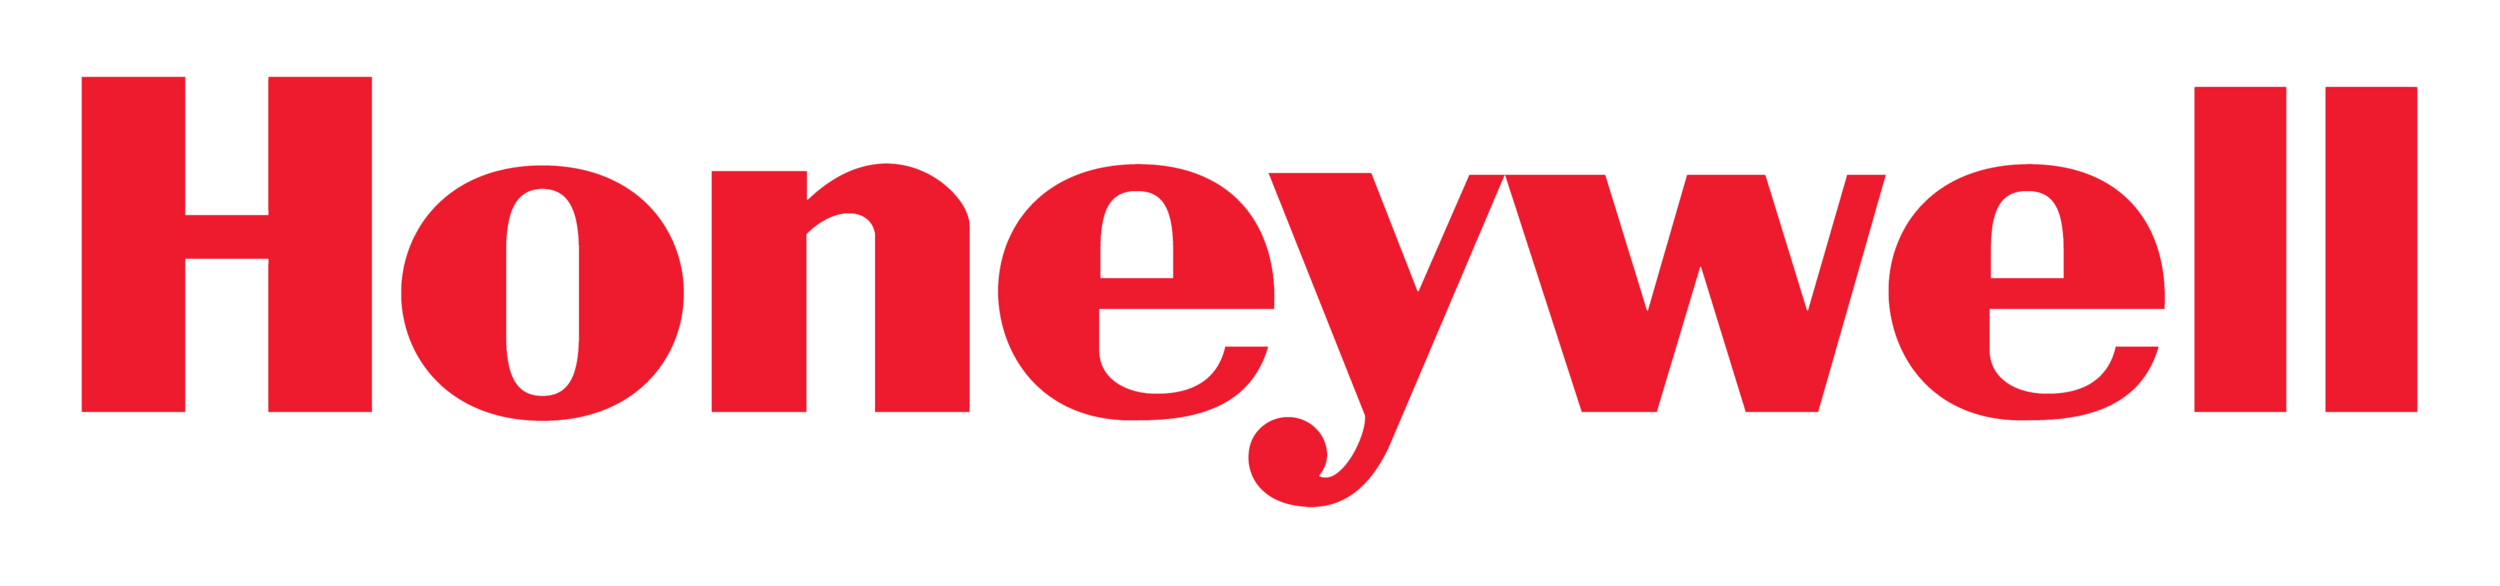 Honeywell-Logo-PNG-Transparent.png